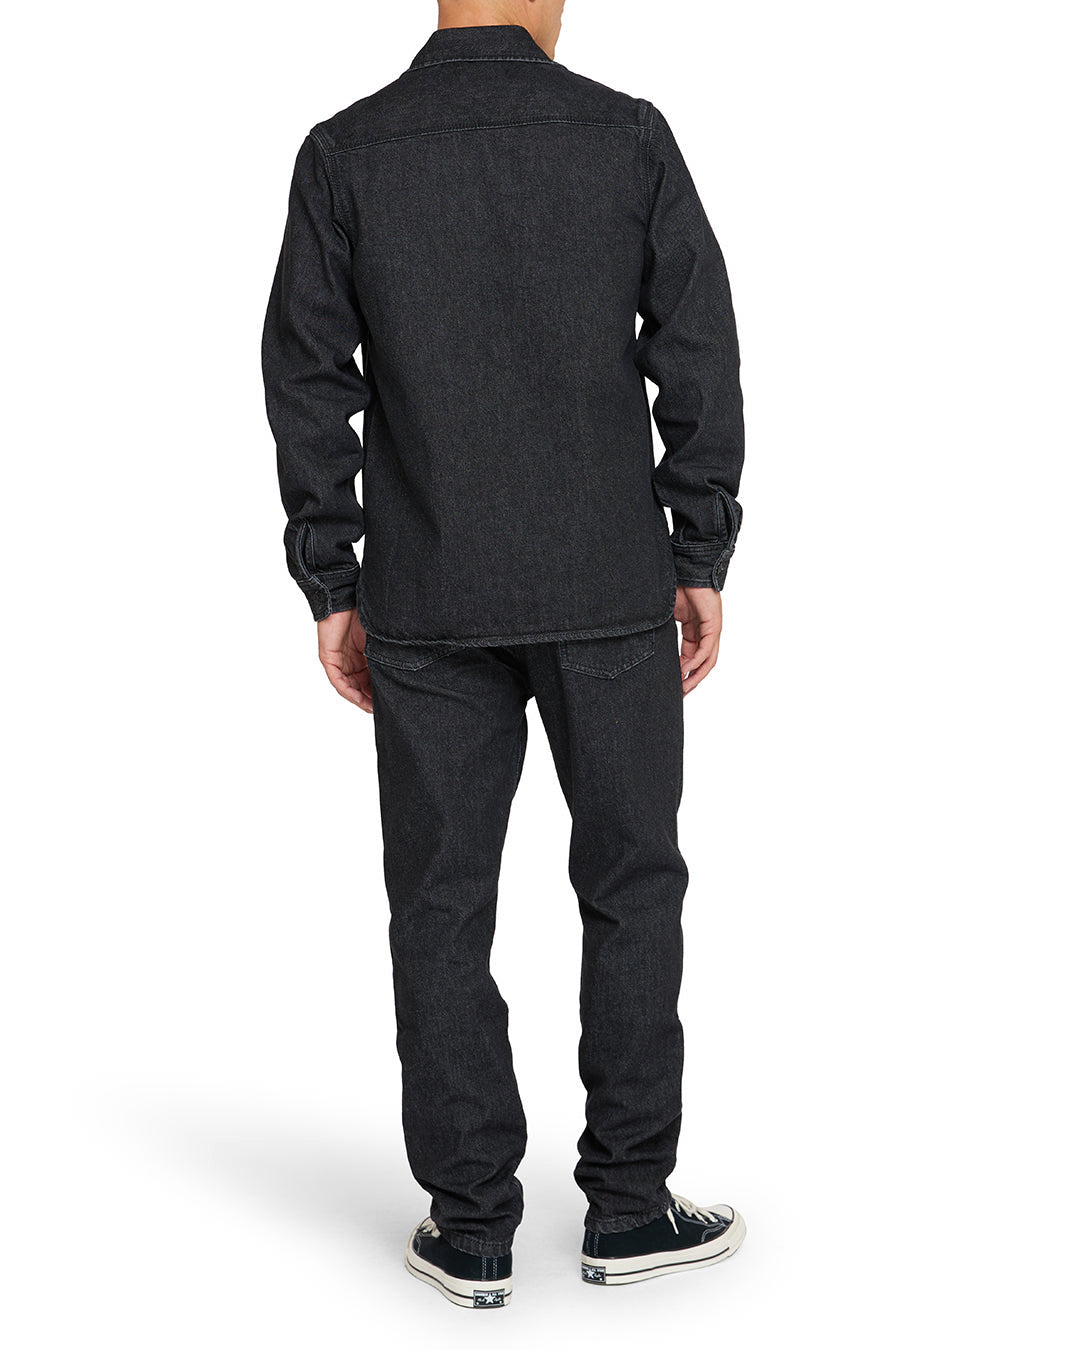 AllSaints Gleason Denim Shirt, Grey, Washed Black at John Lewis & Partners